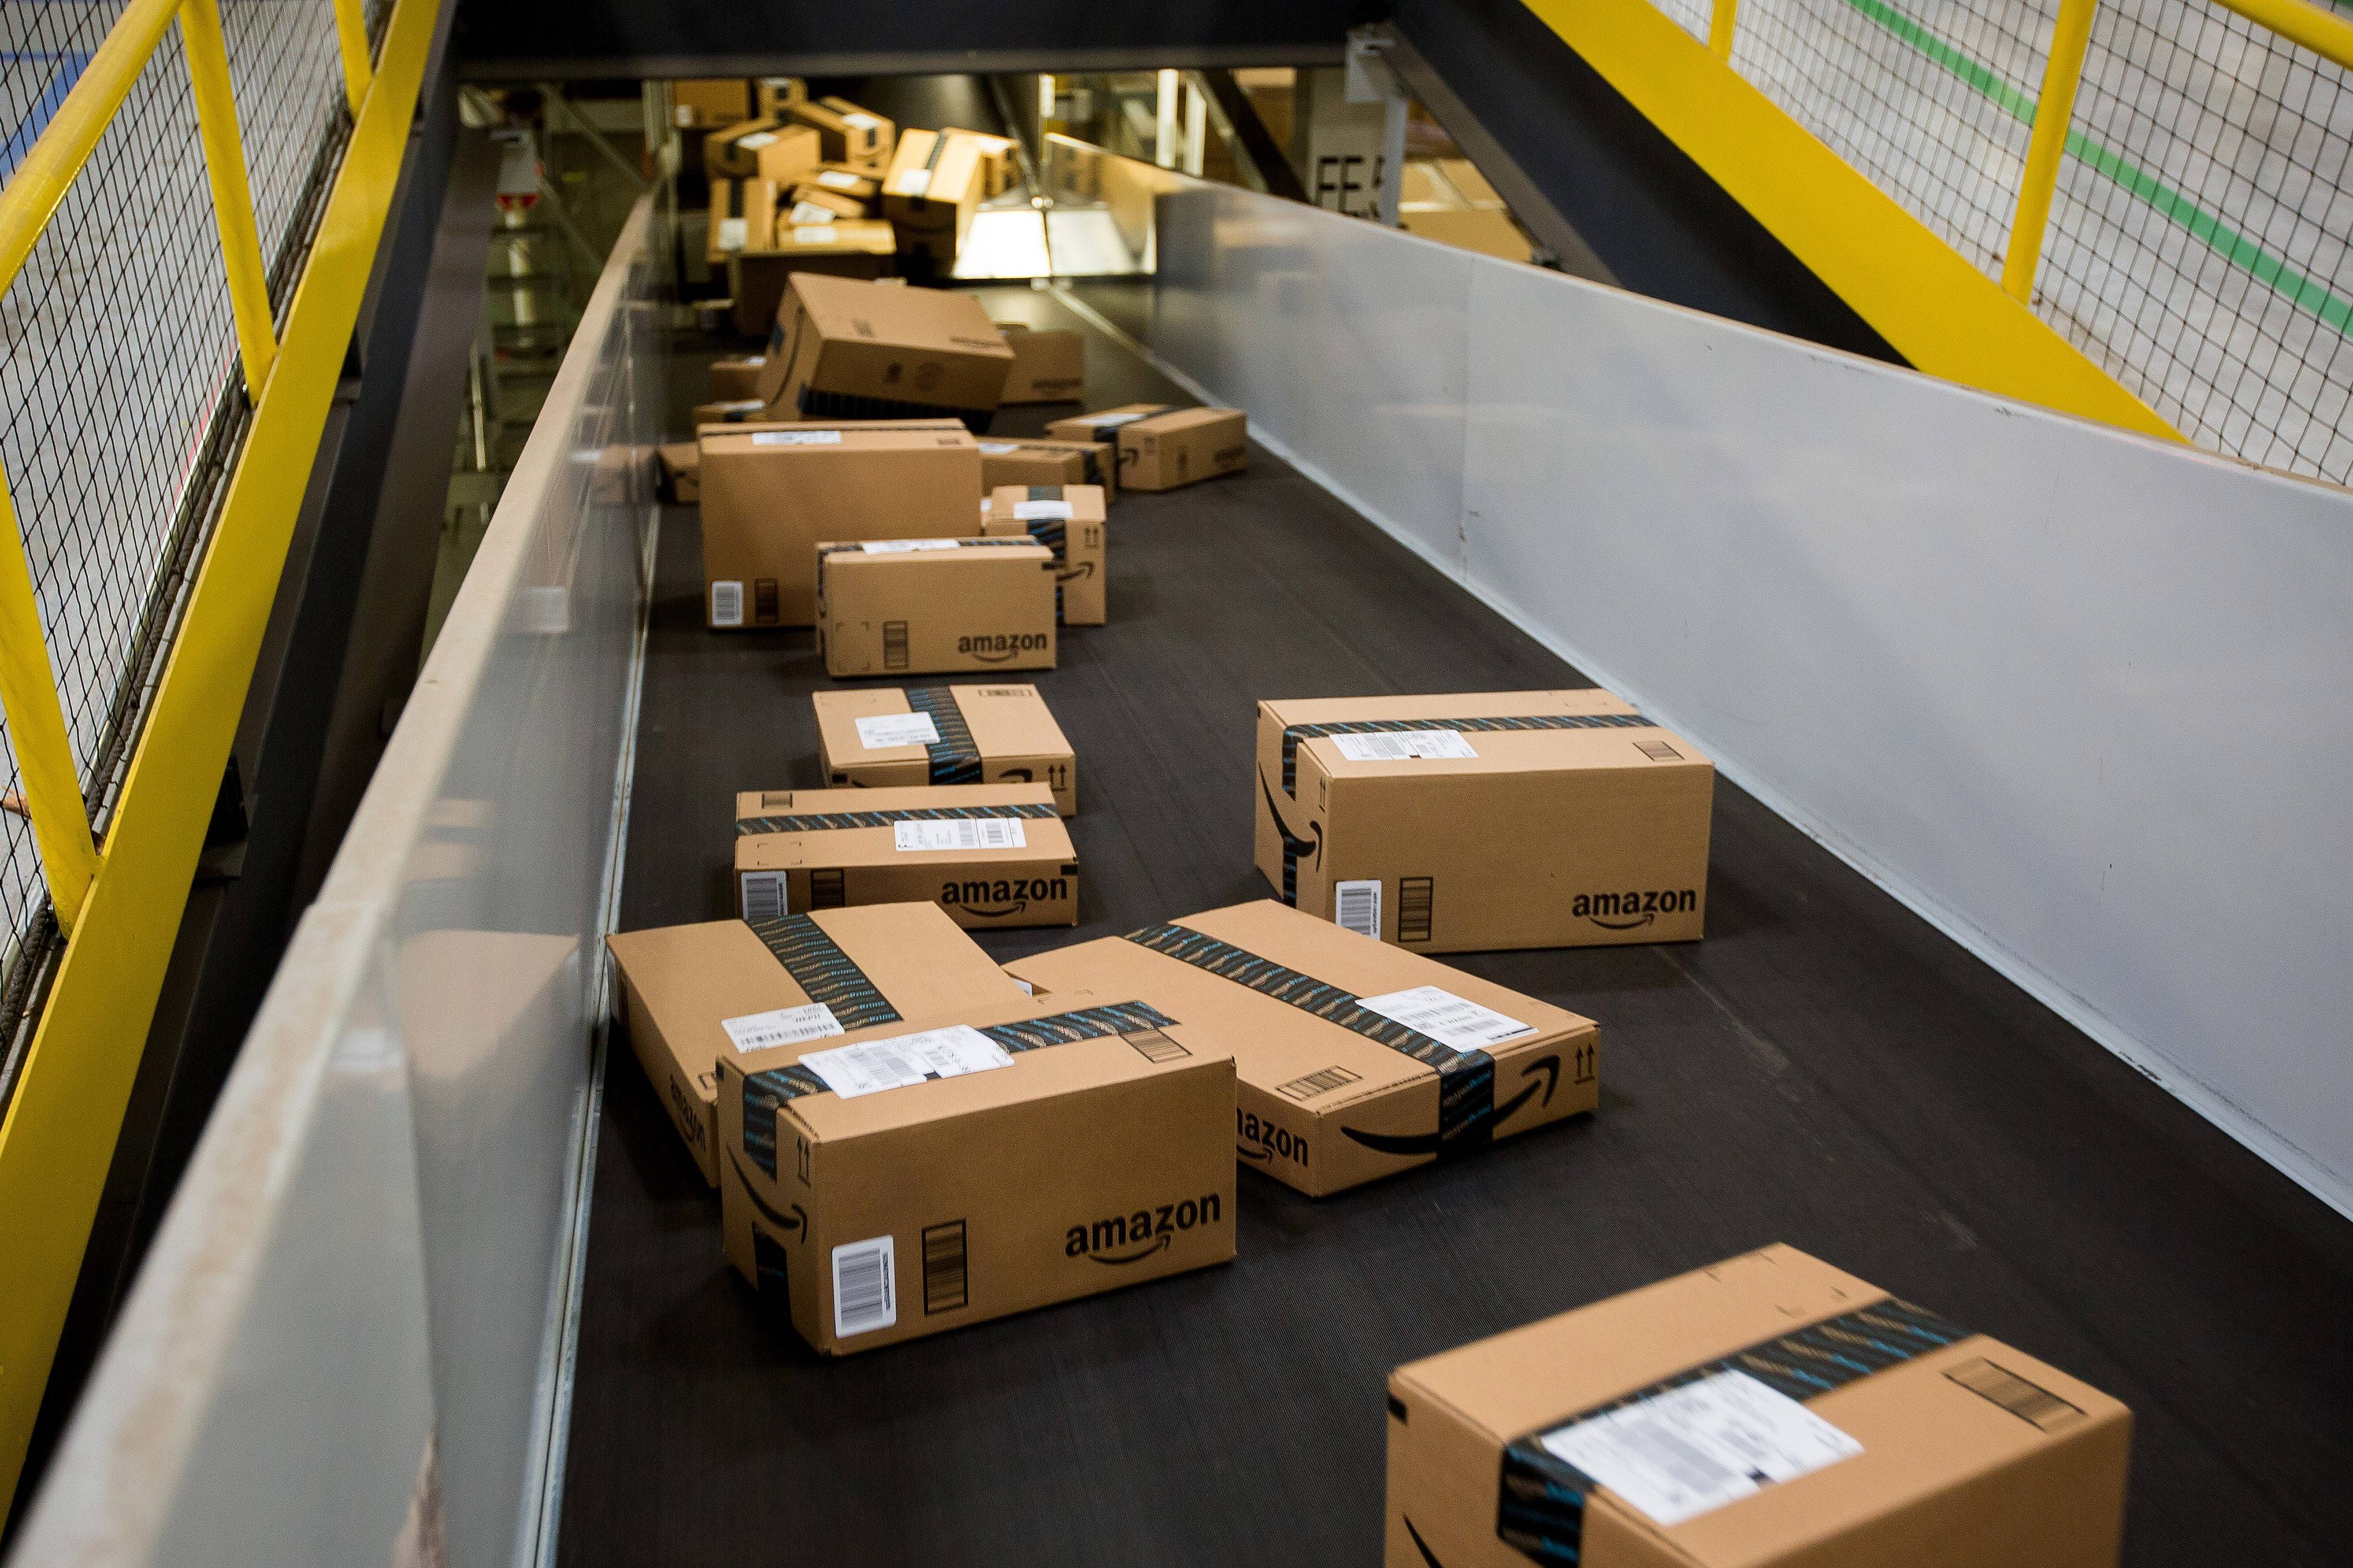 Amazon product boxes